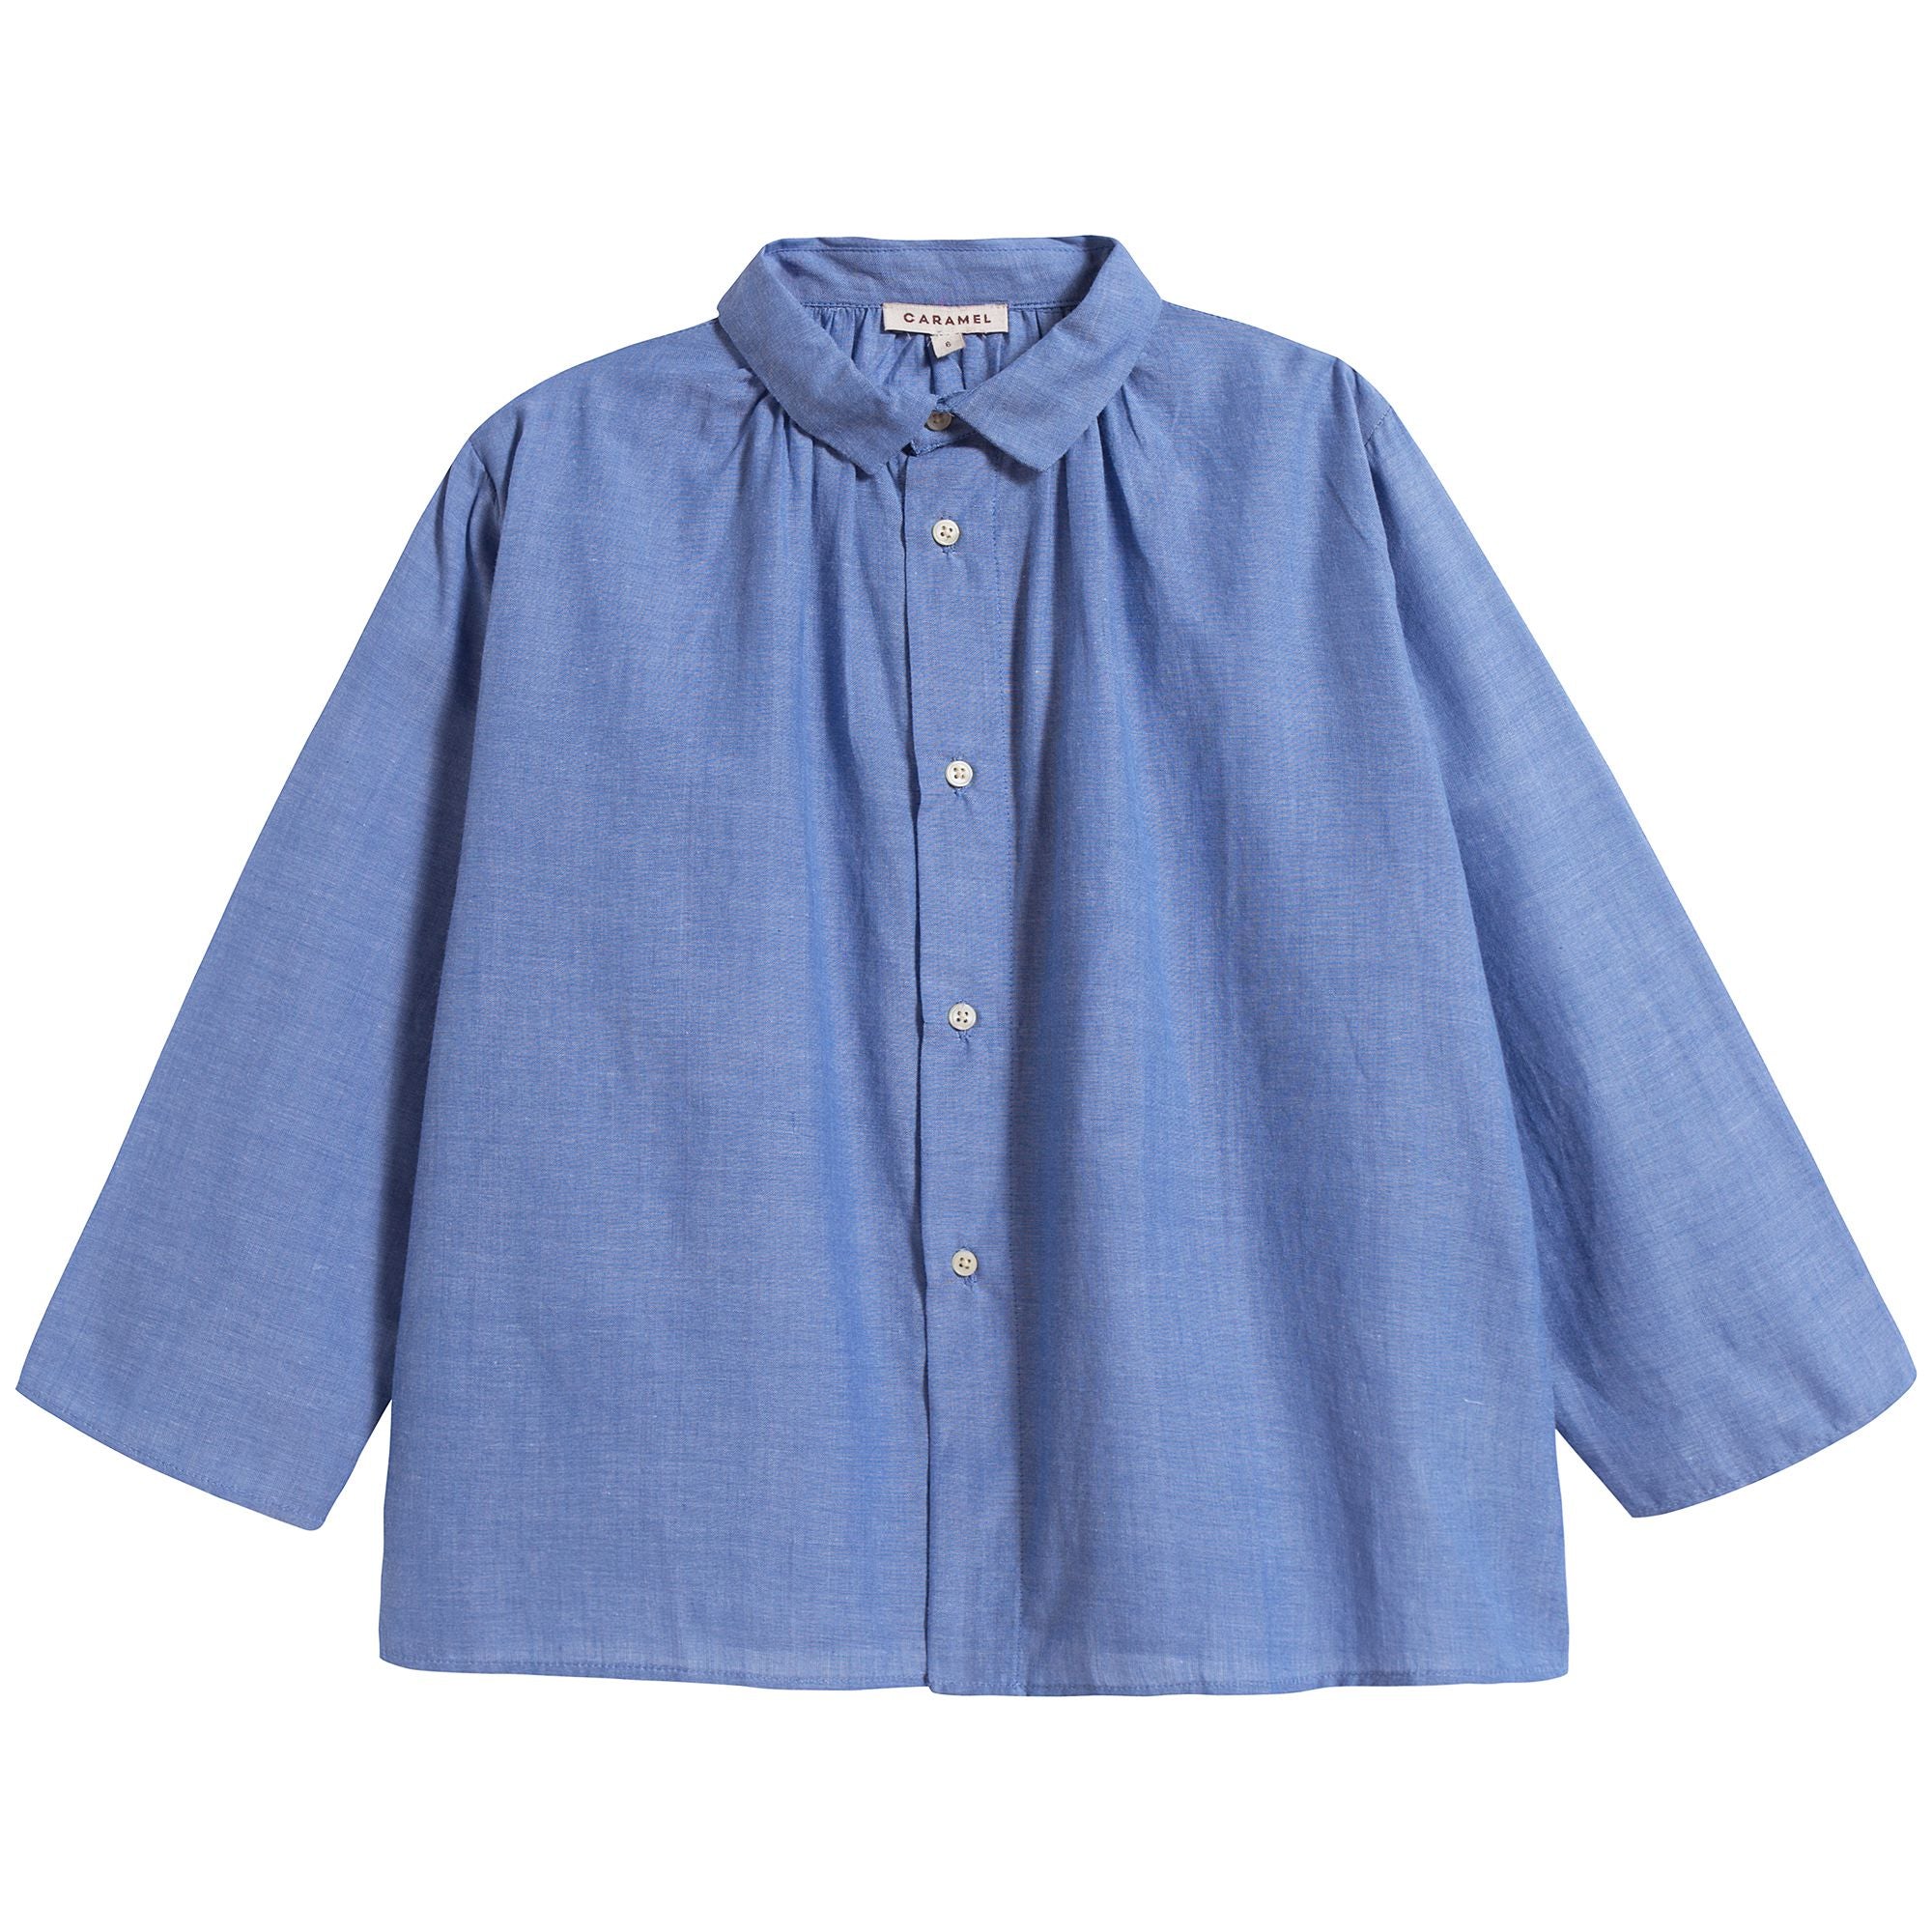 Boys Cornflower Blue Cotton Shirt